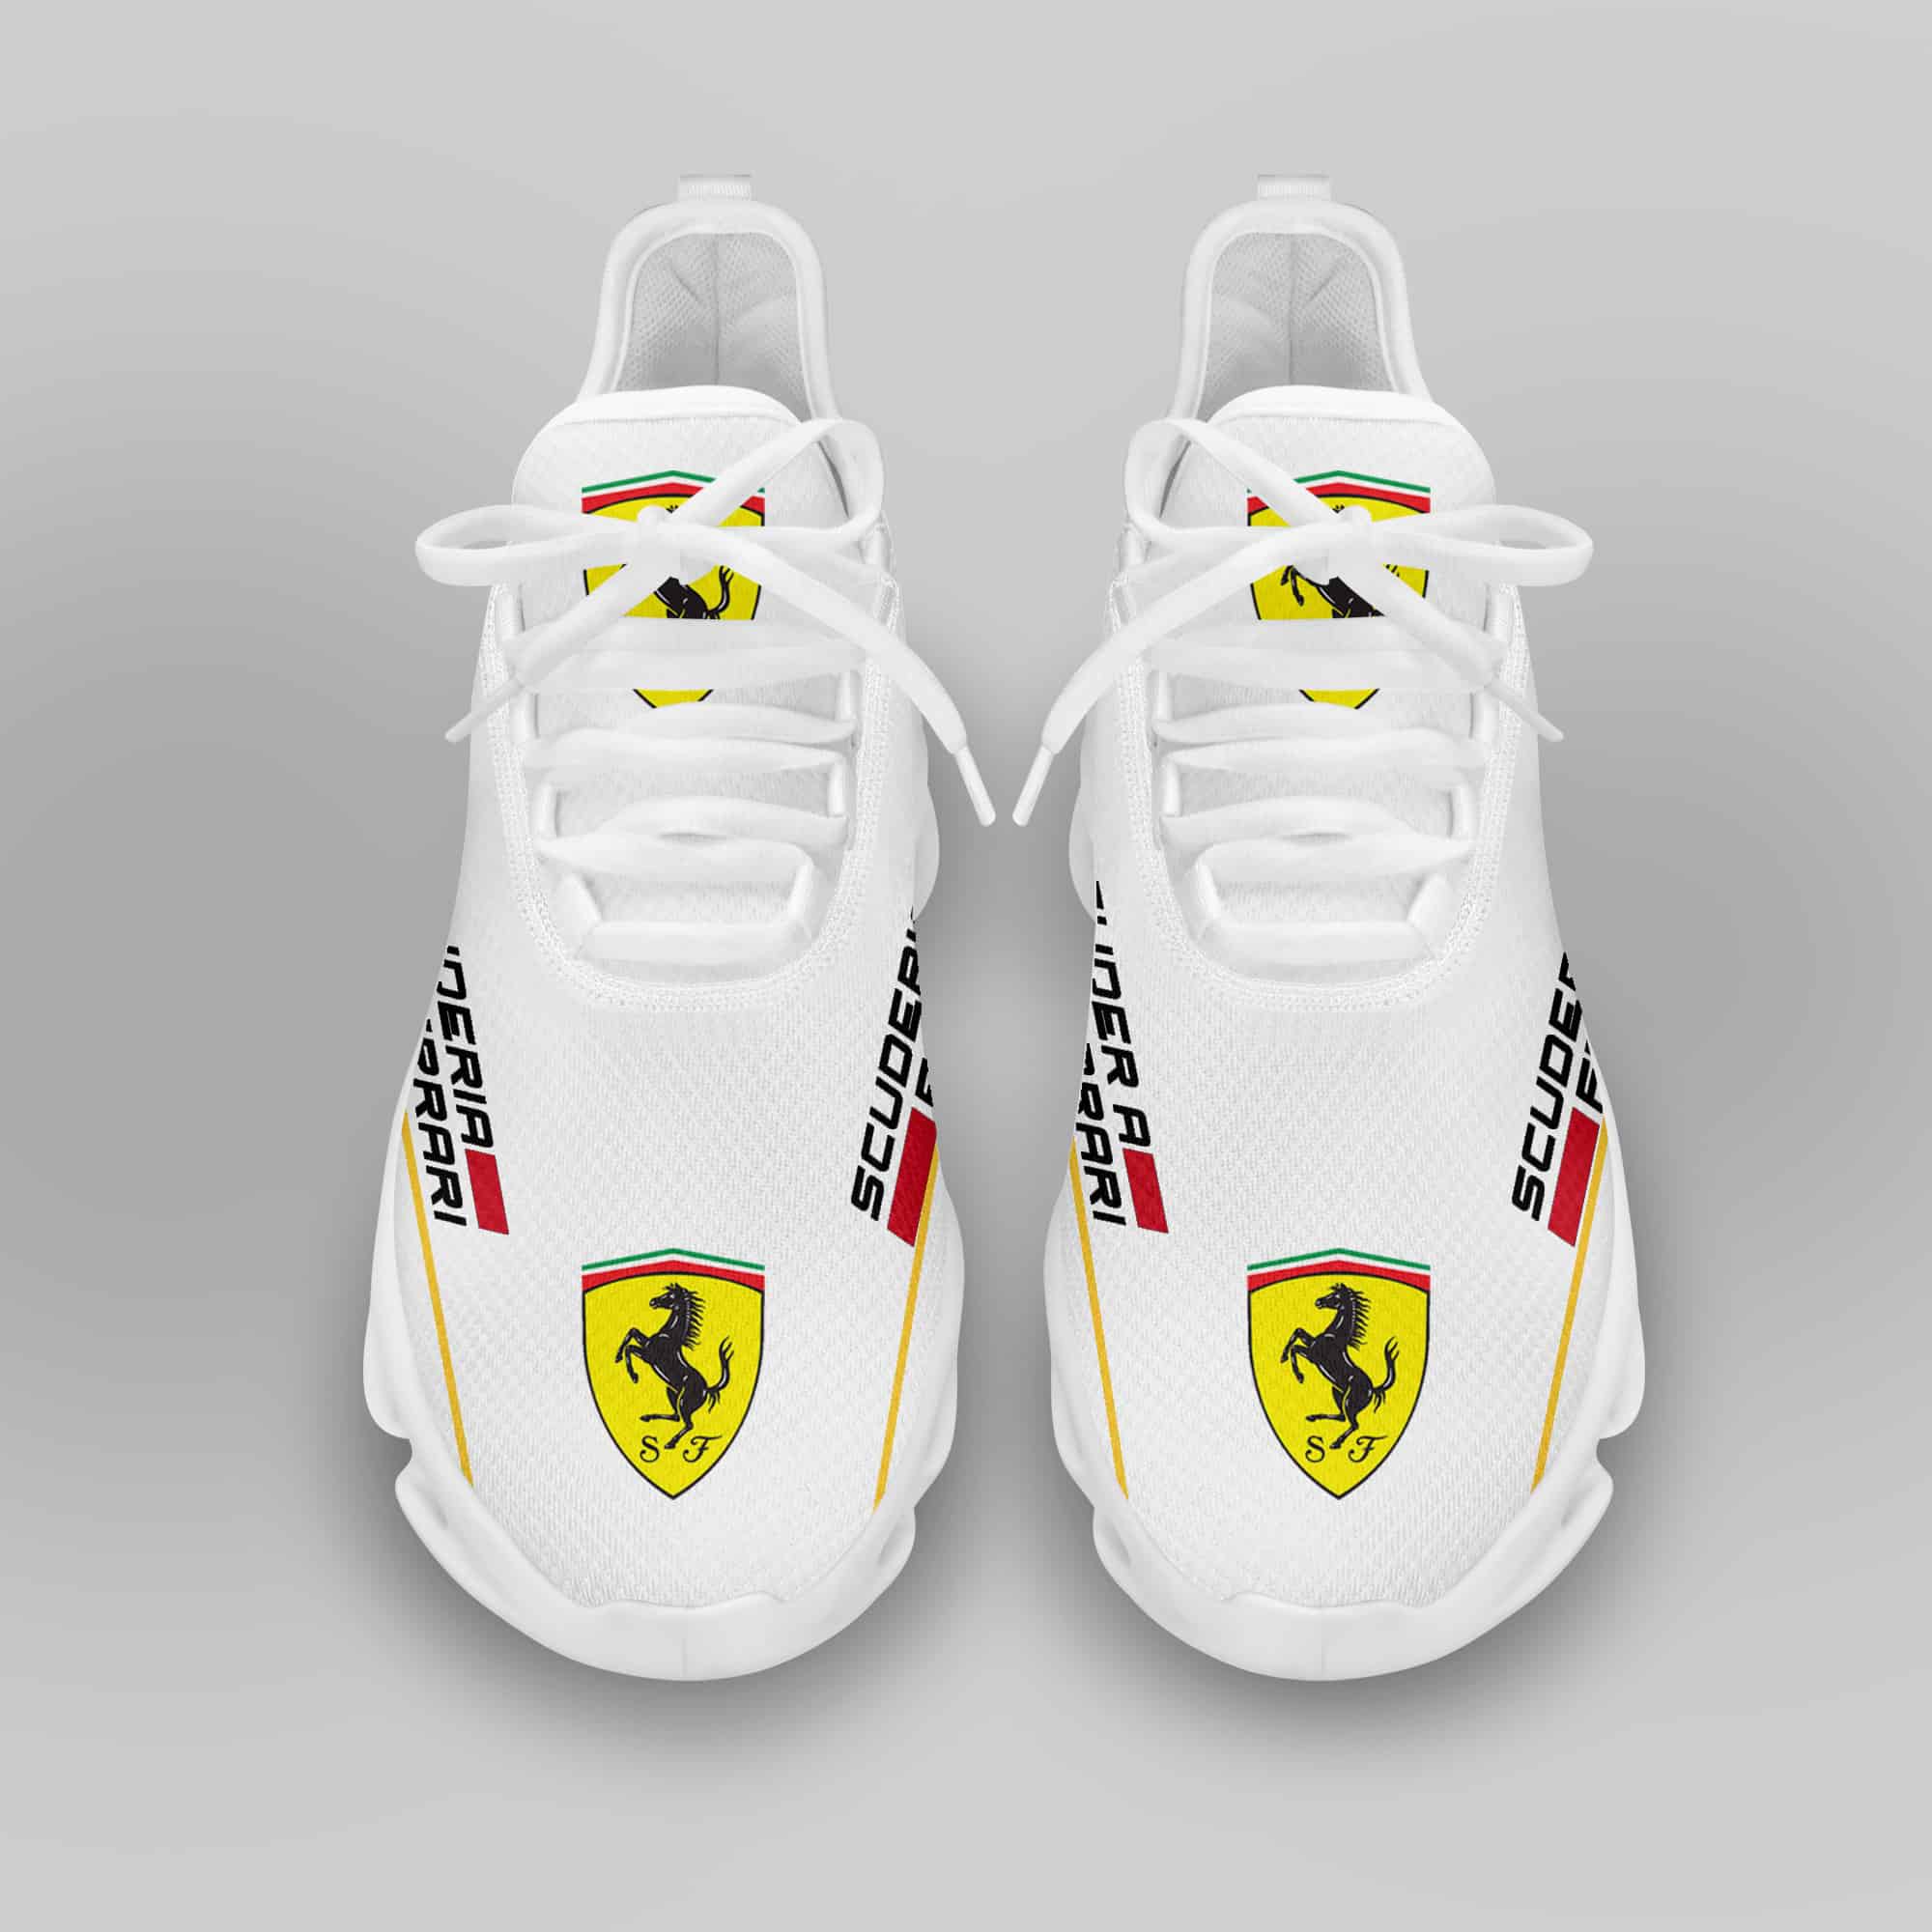 Ferrari Sneaker Running Shoes Max Soul Shoes Sneakers Ver 33 3